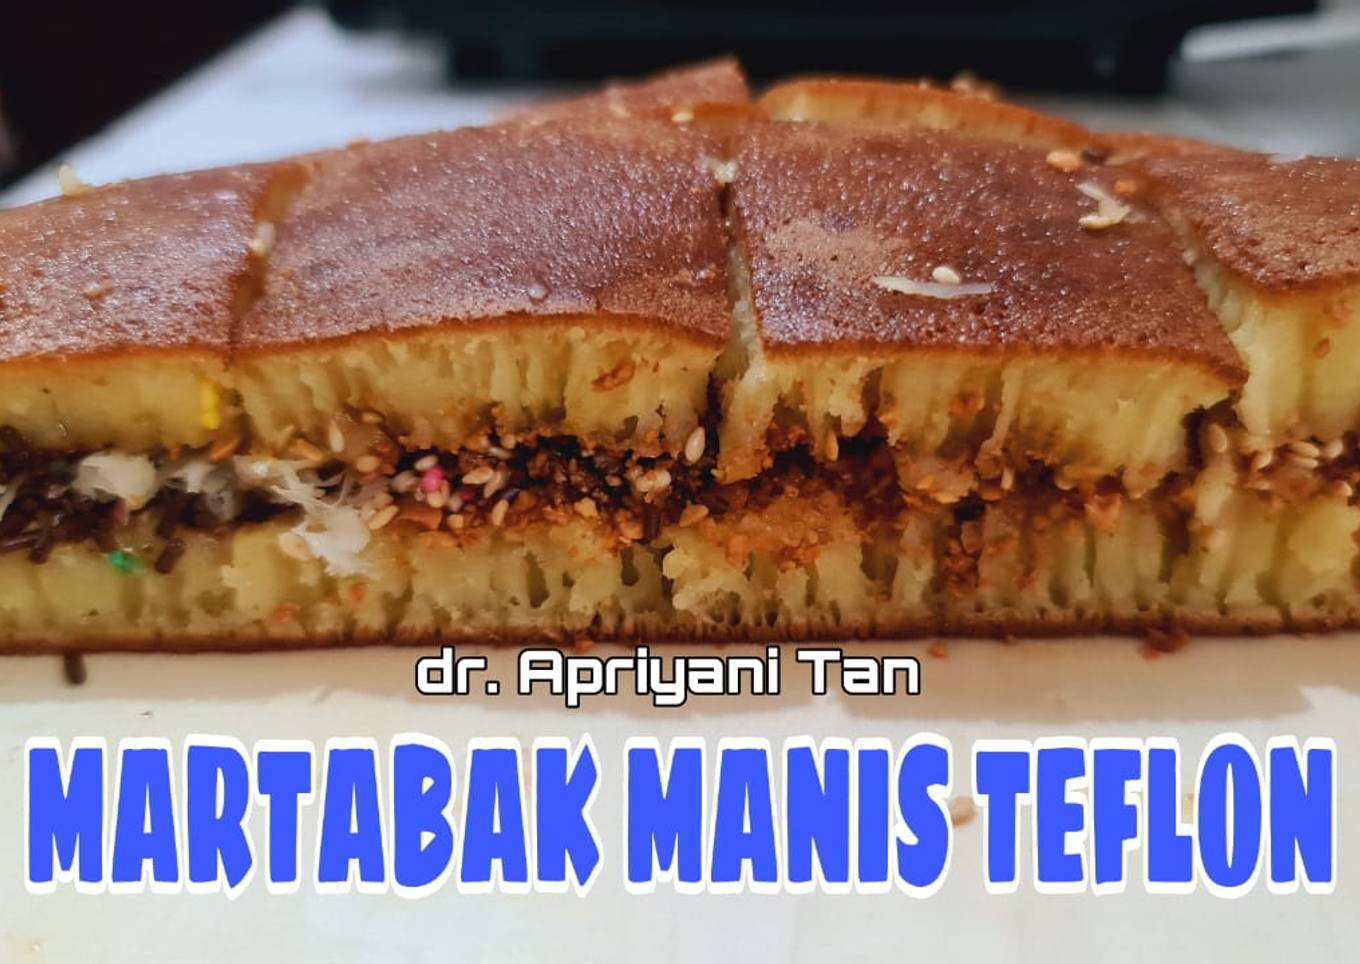 Martabak Manis Teflon,Berongga Max - resep kuliner nusantara